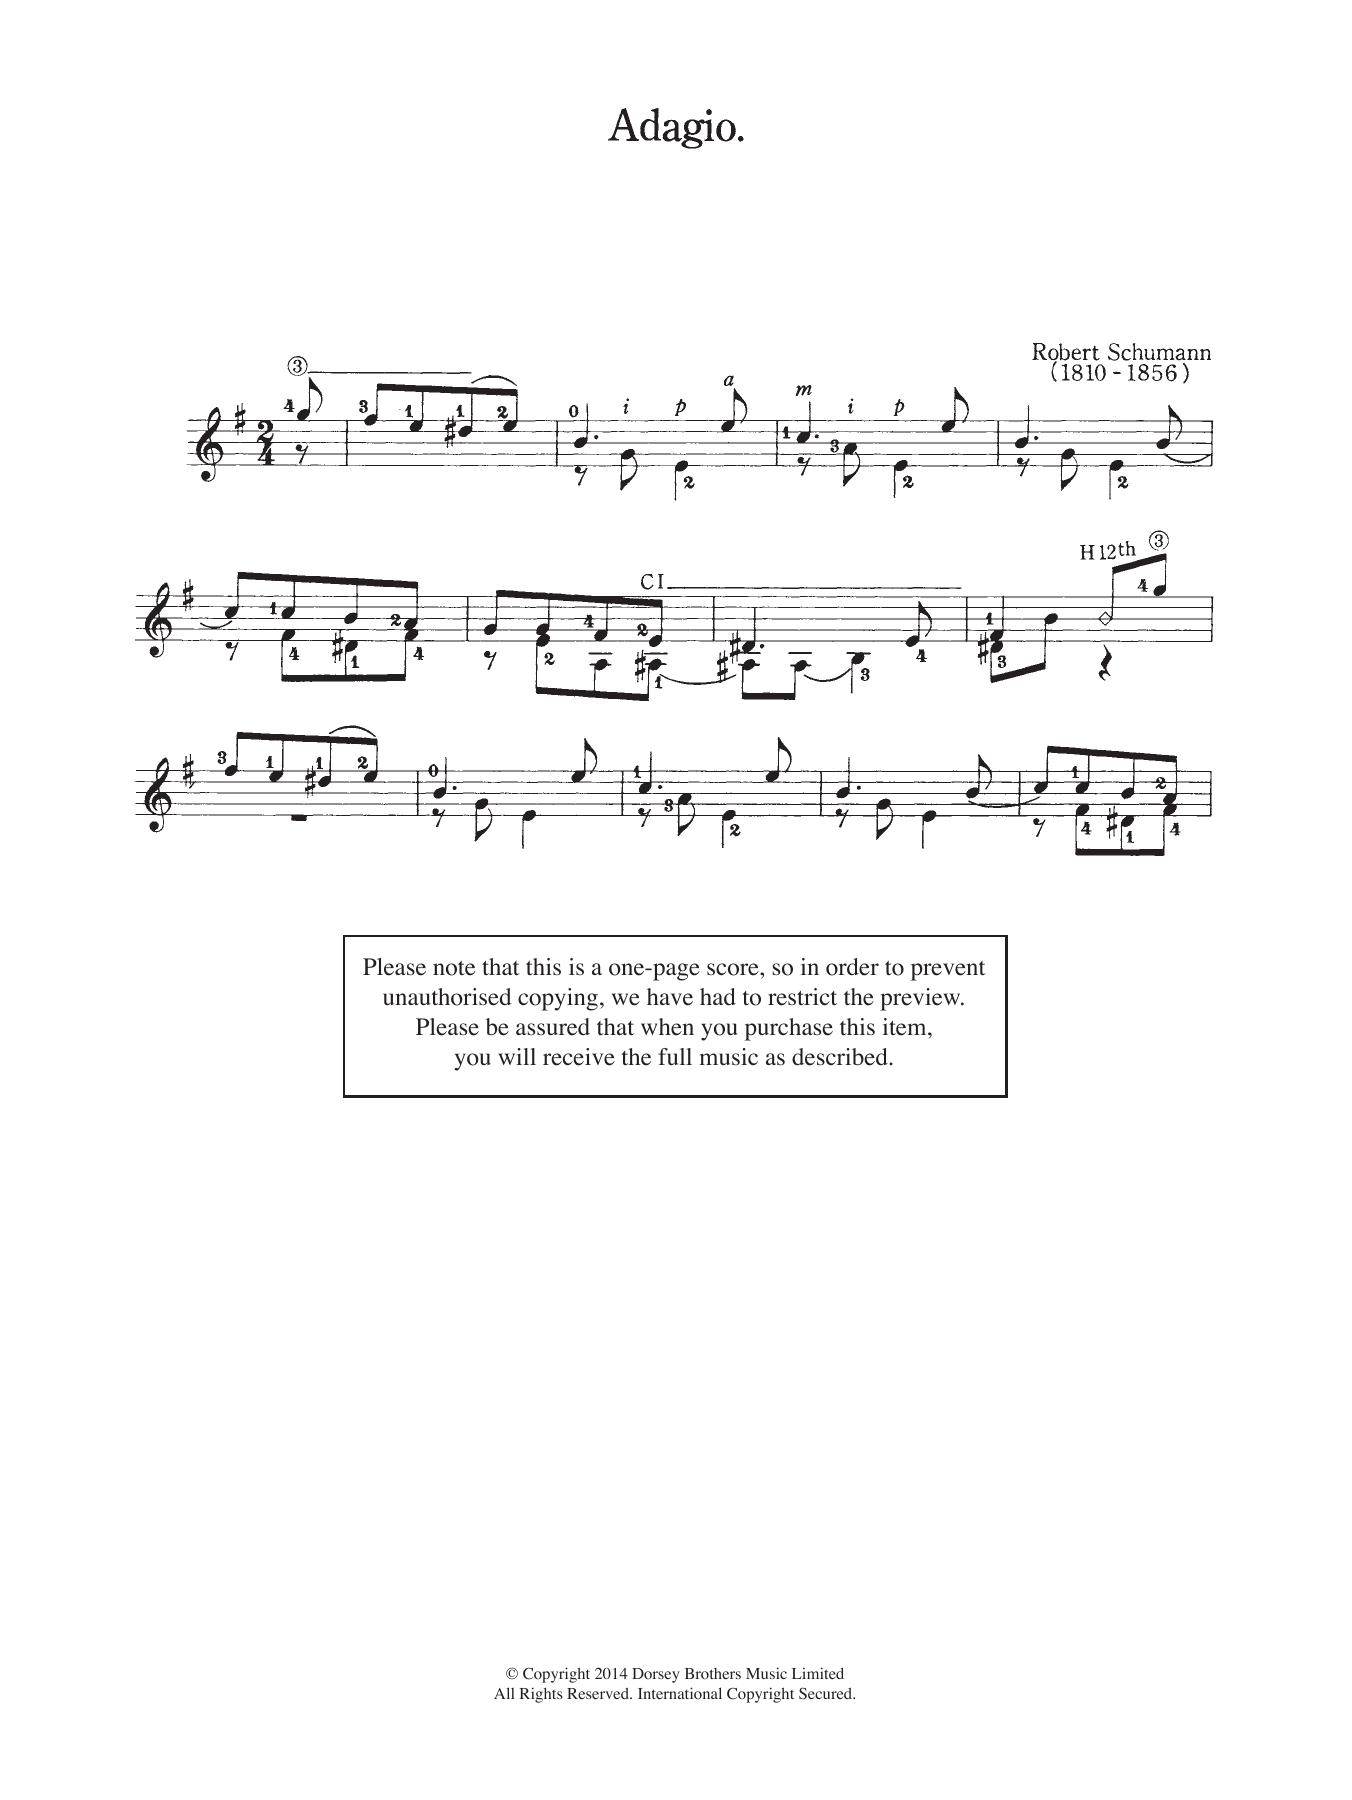 Robert Schumann Adagio Sheet Music Notes & Chords for Guitar - Download or Print PDF